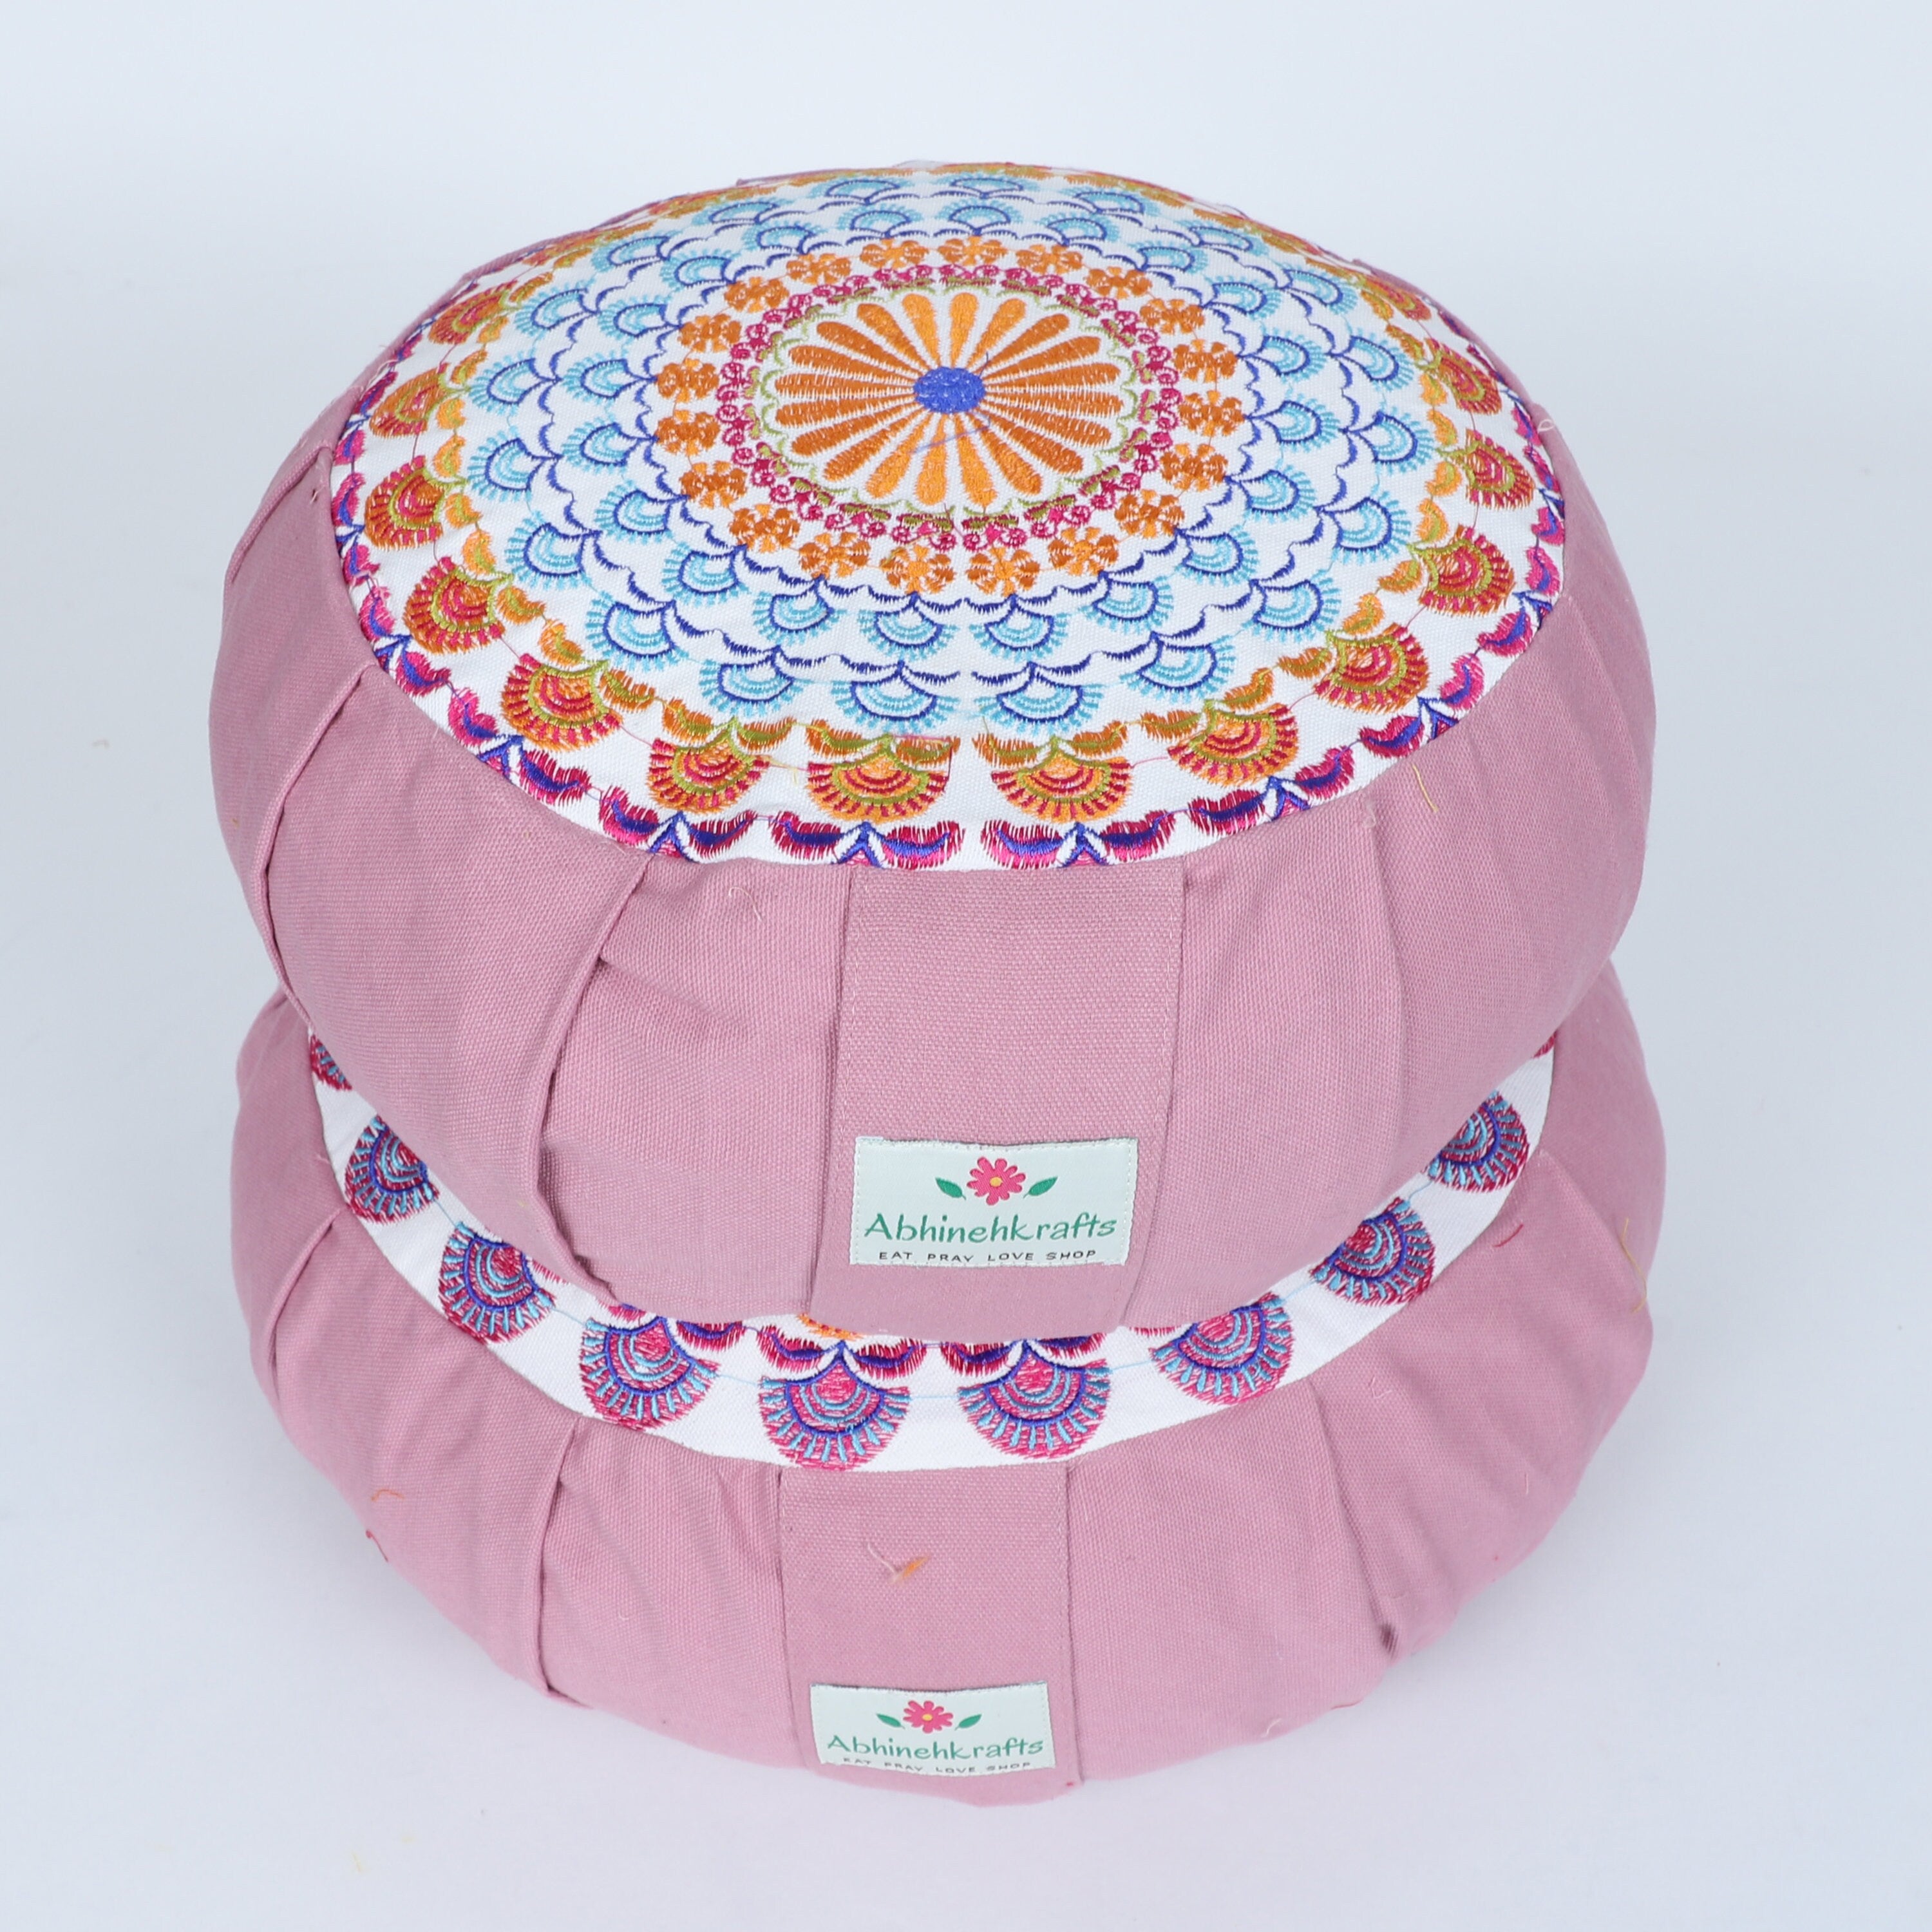 Embroidered Round Portable Meditation Cushion, Zafu Yoga Pillow - Goda -  YogaKargha